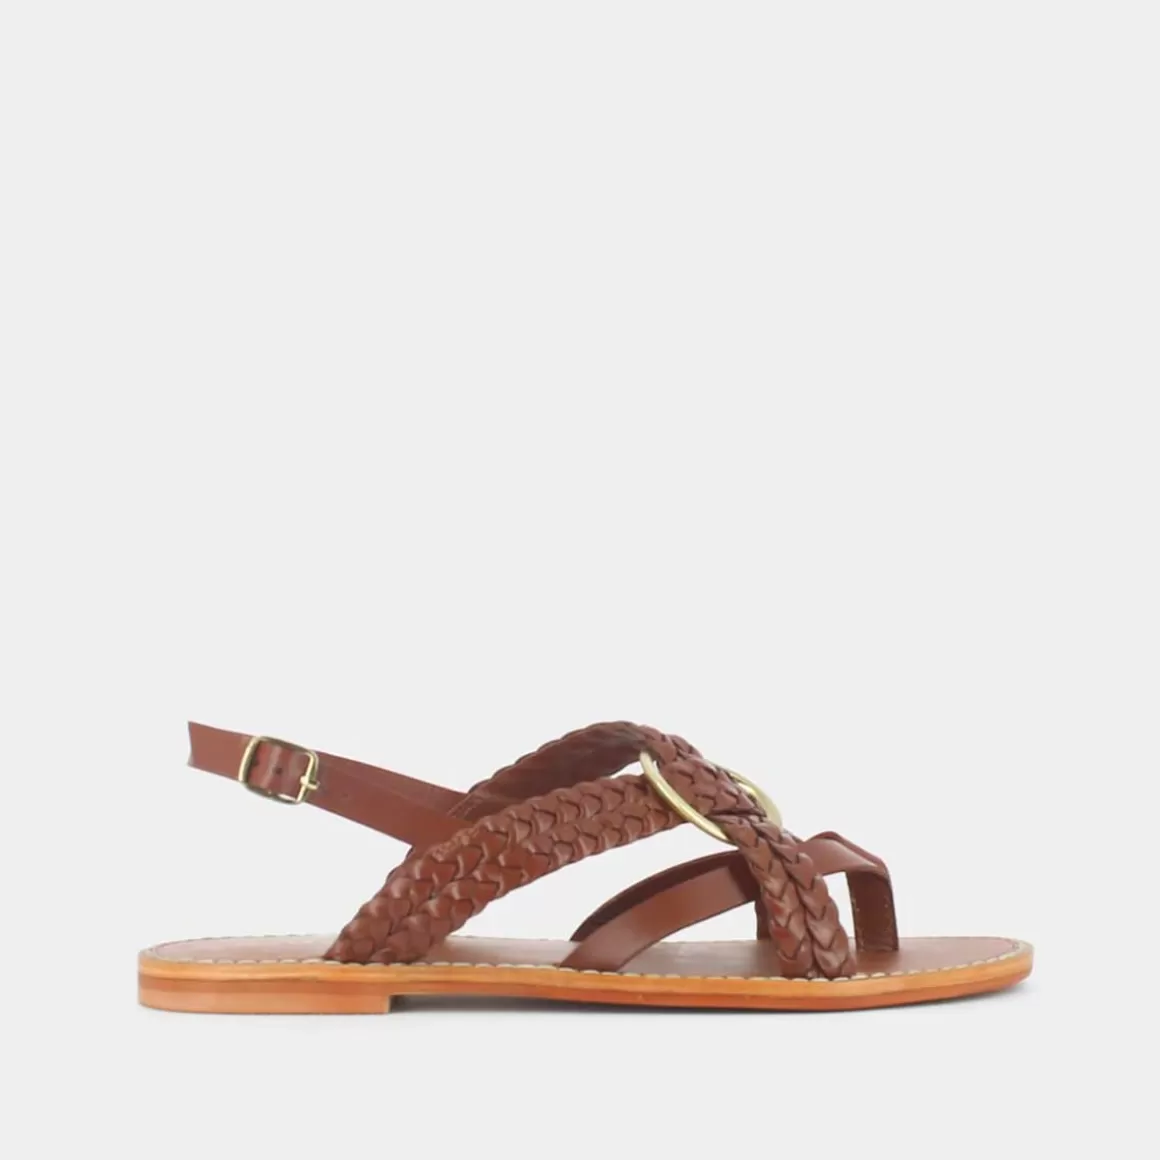 Woven flat sandals<Jonak Sale